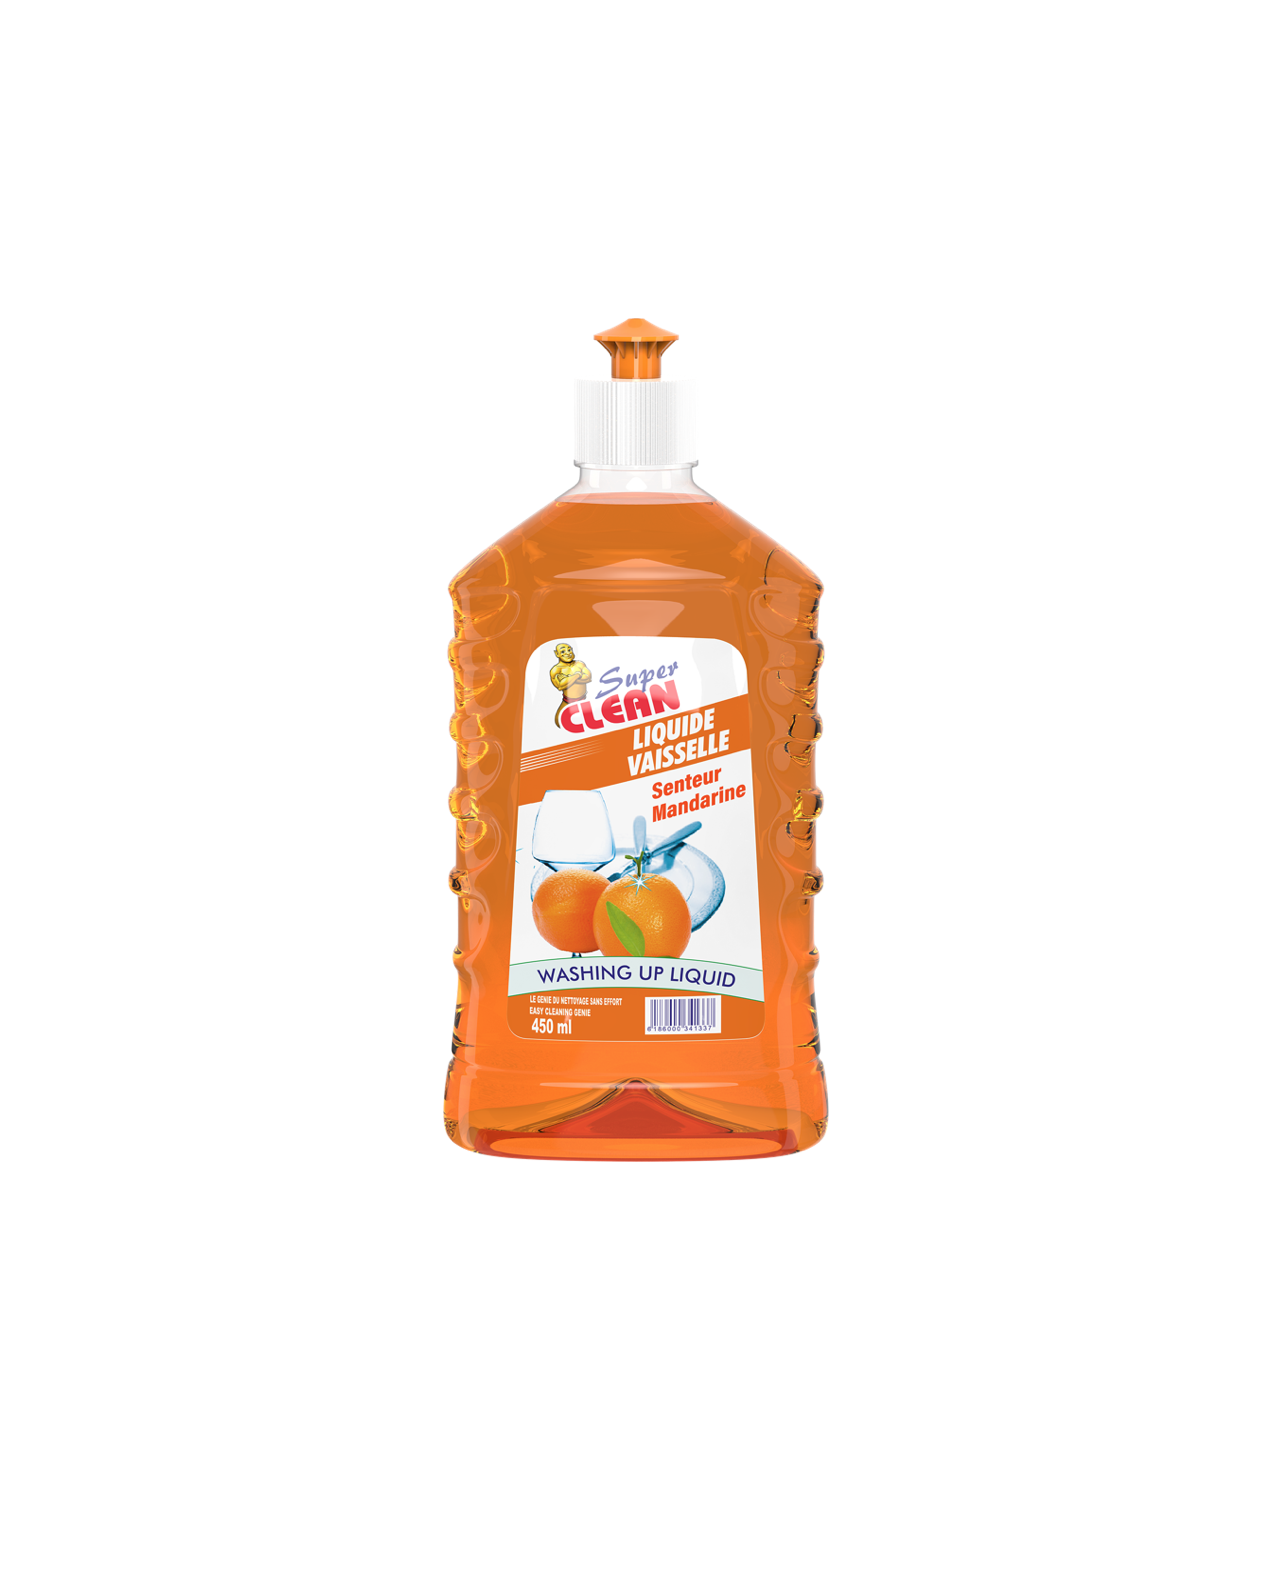 SUPER CLEAN_Liquide Mandarine 450ml_siprochim